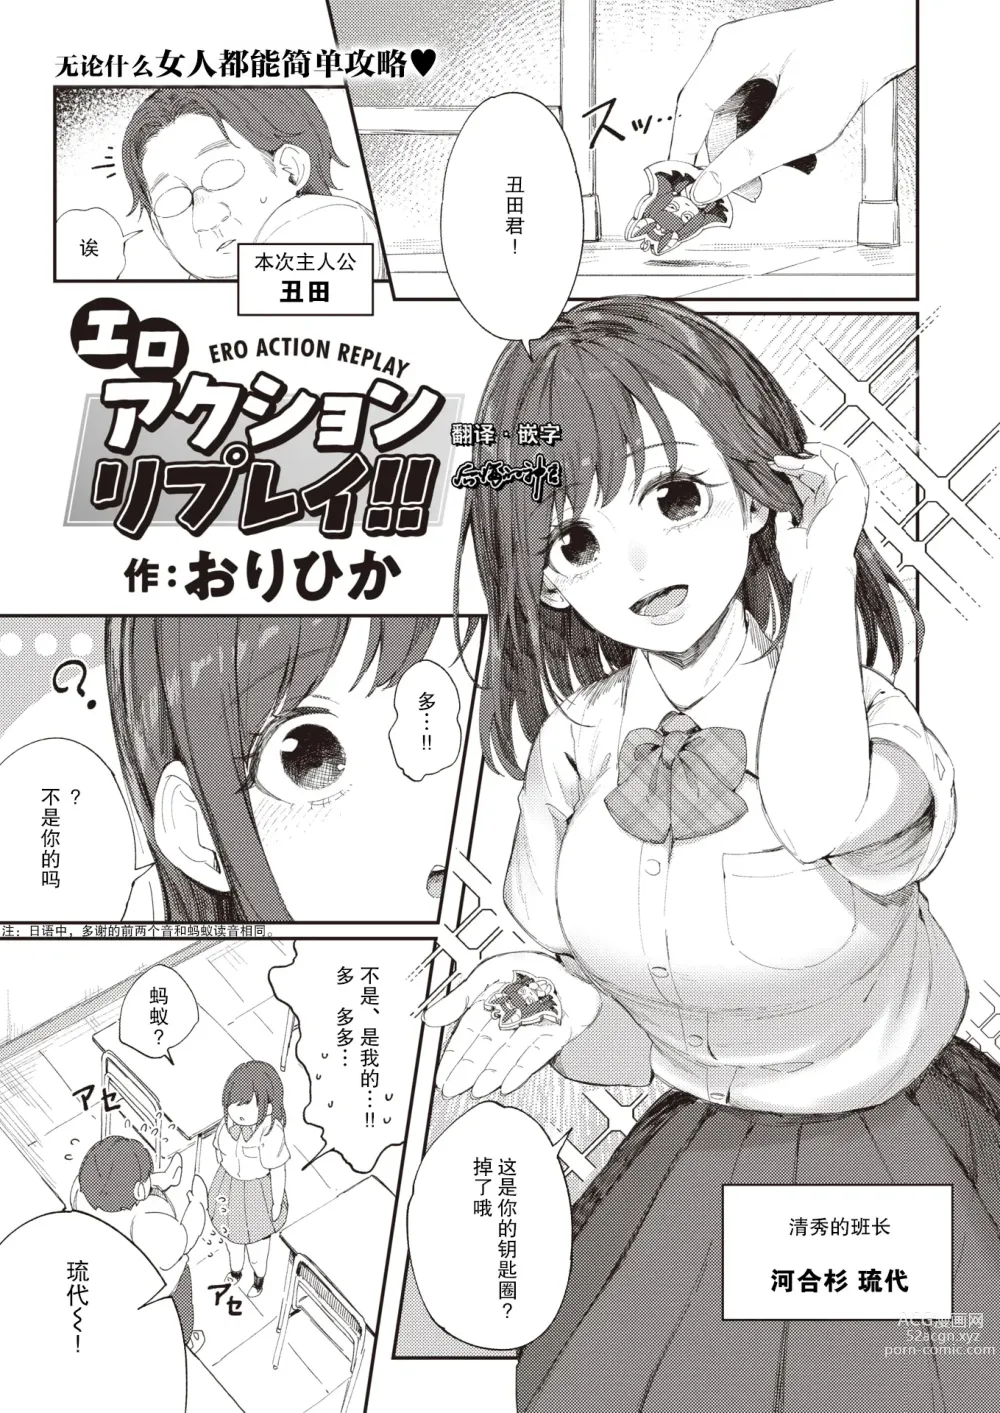 Page 1 of manga ERO ACTION REPLAY!!